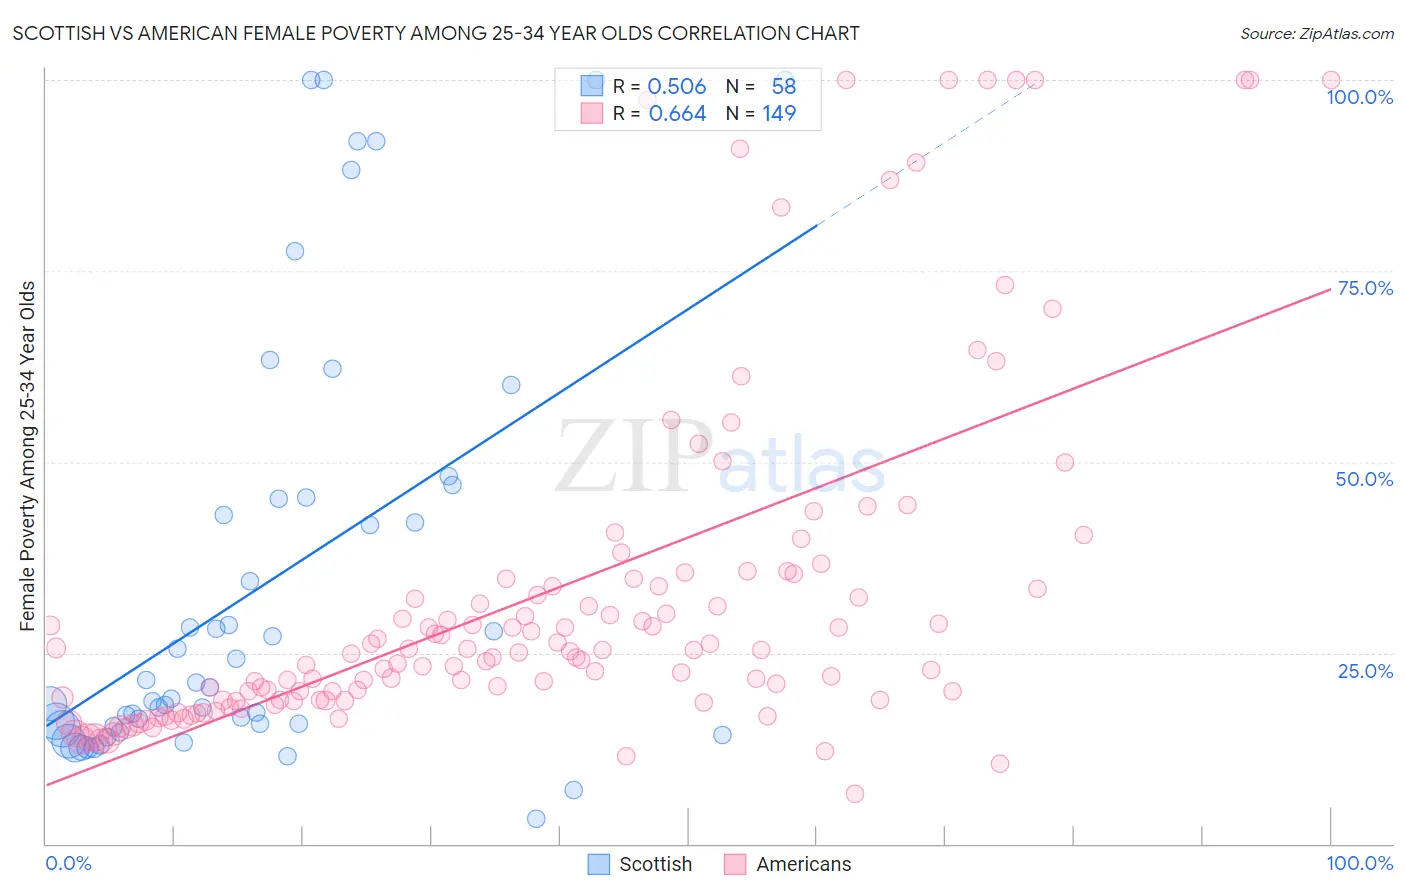 Scottish vs American Female Poverty Among 25-34 Year Olds